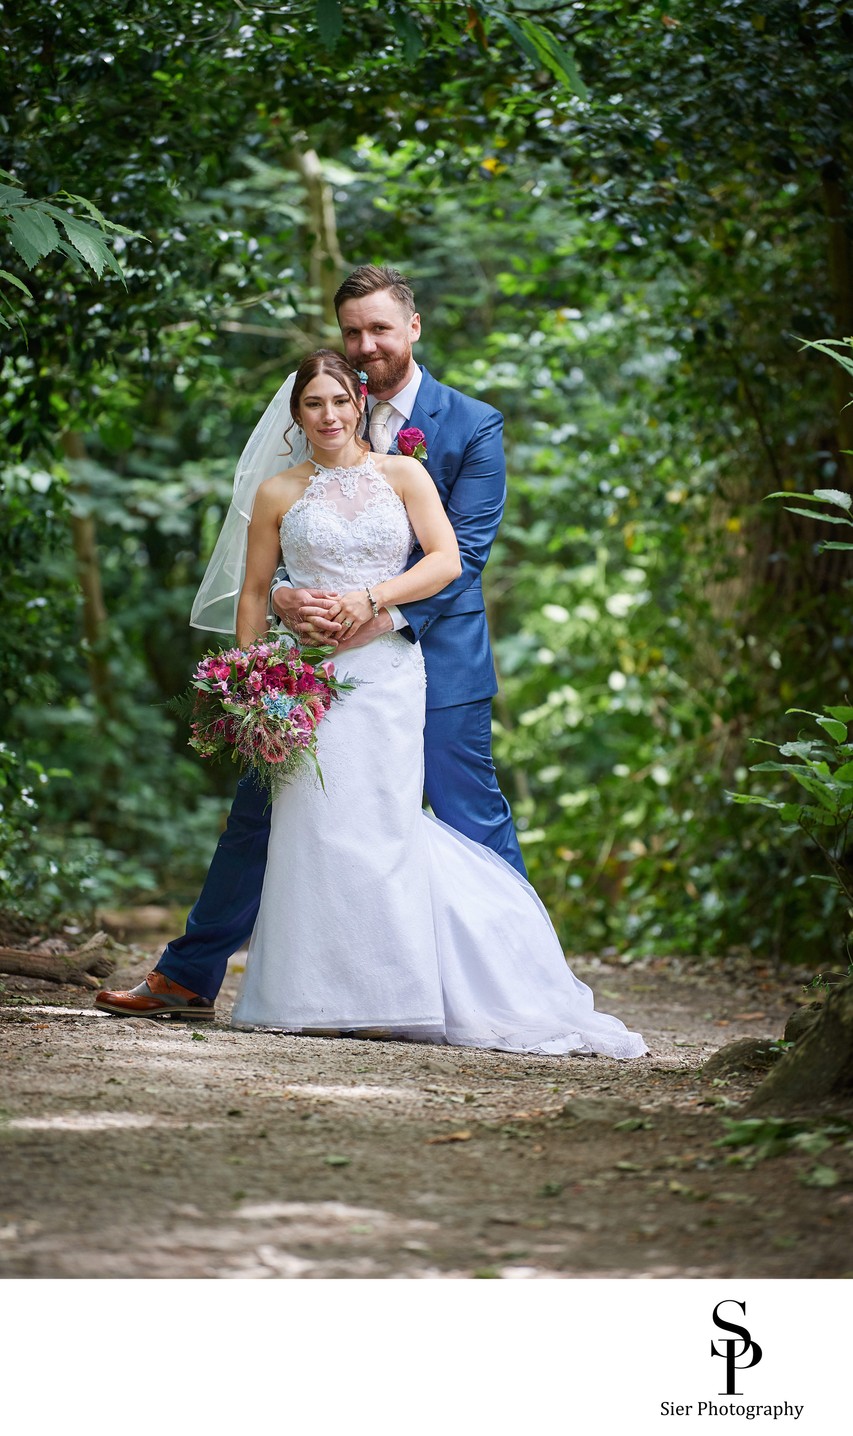  Ecclesall Woods Wedding Photography